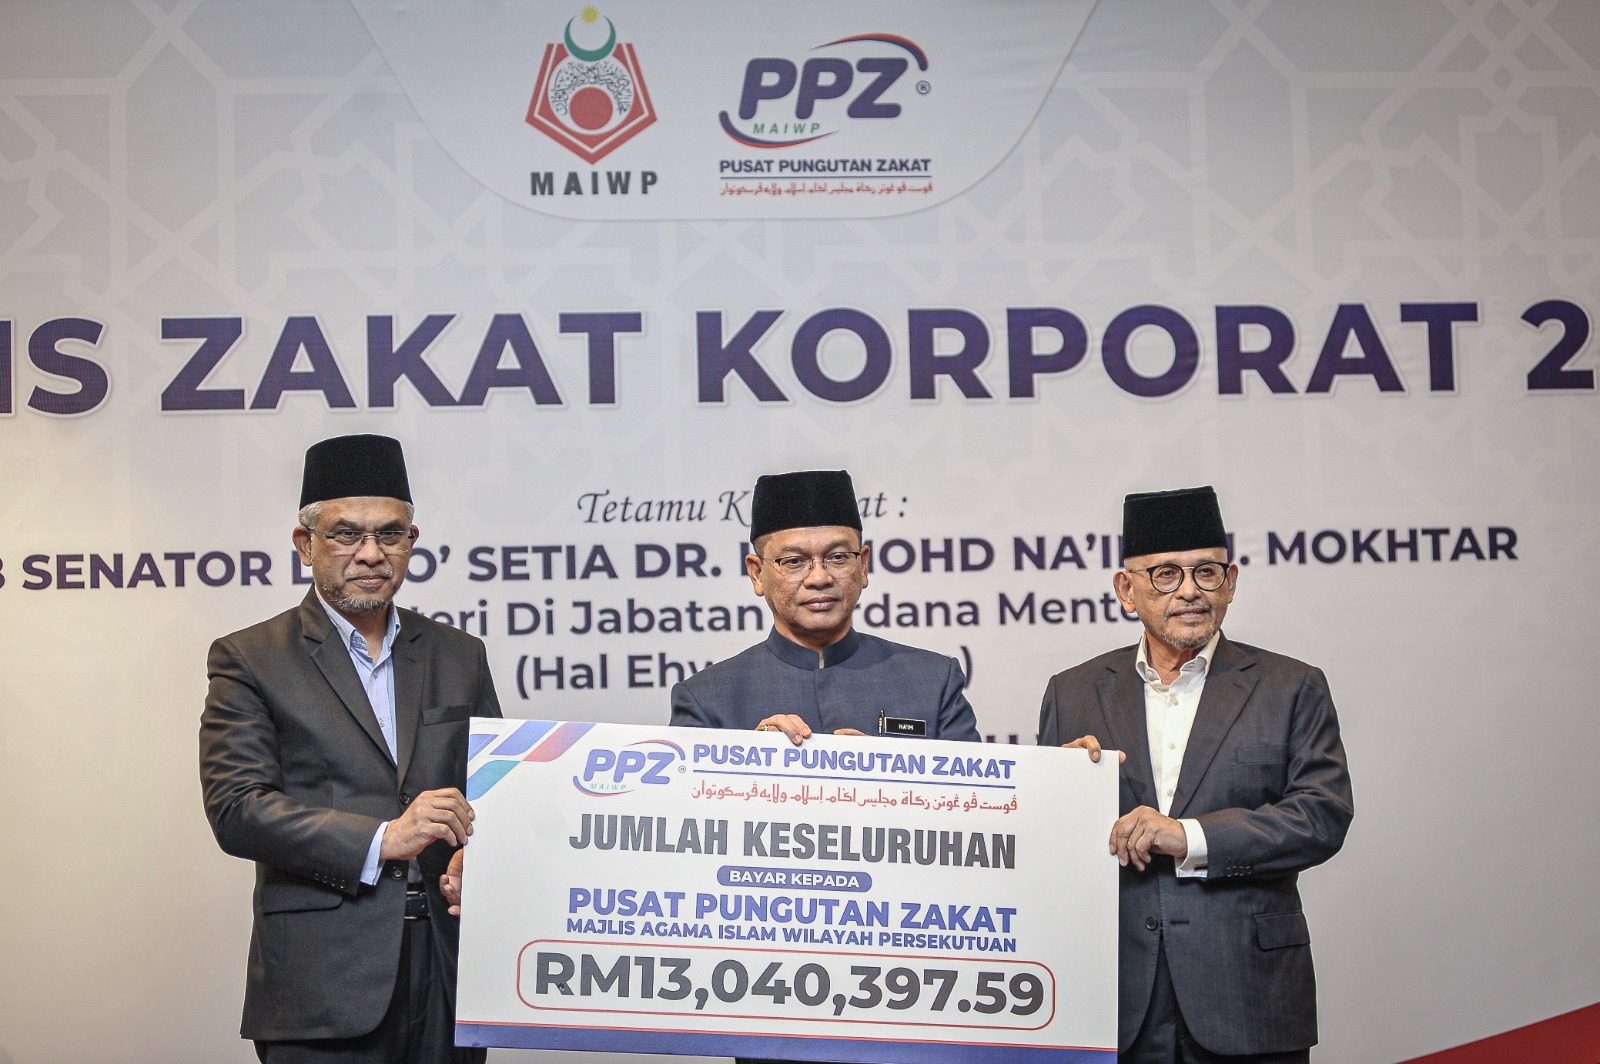 PPZ-MAIWP terima bayaran zakat perniagaan RM13 juta